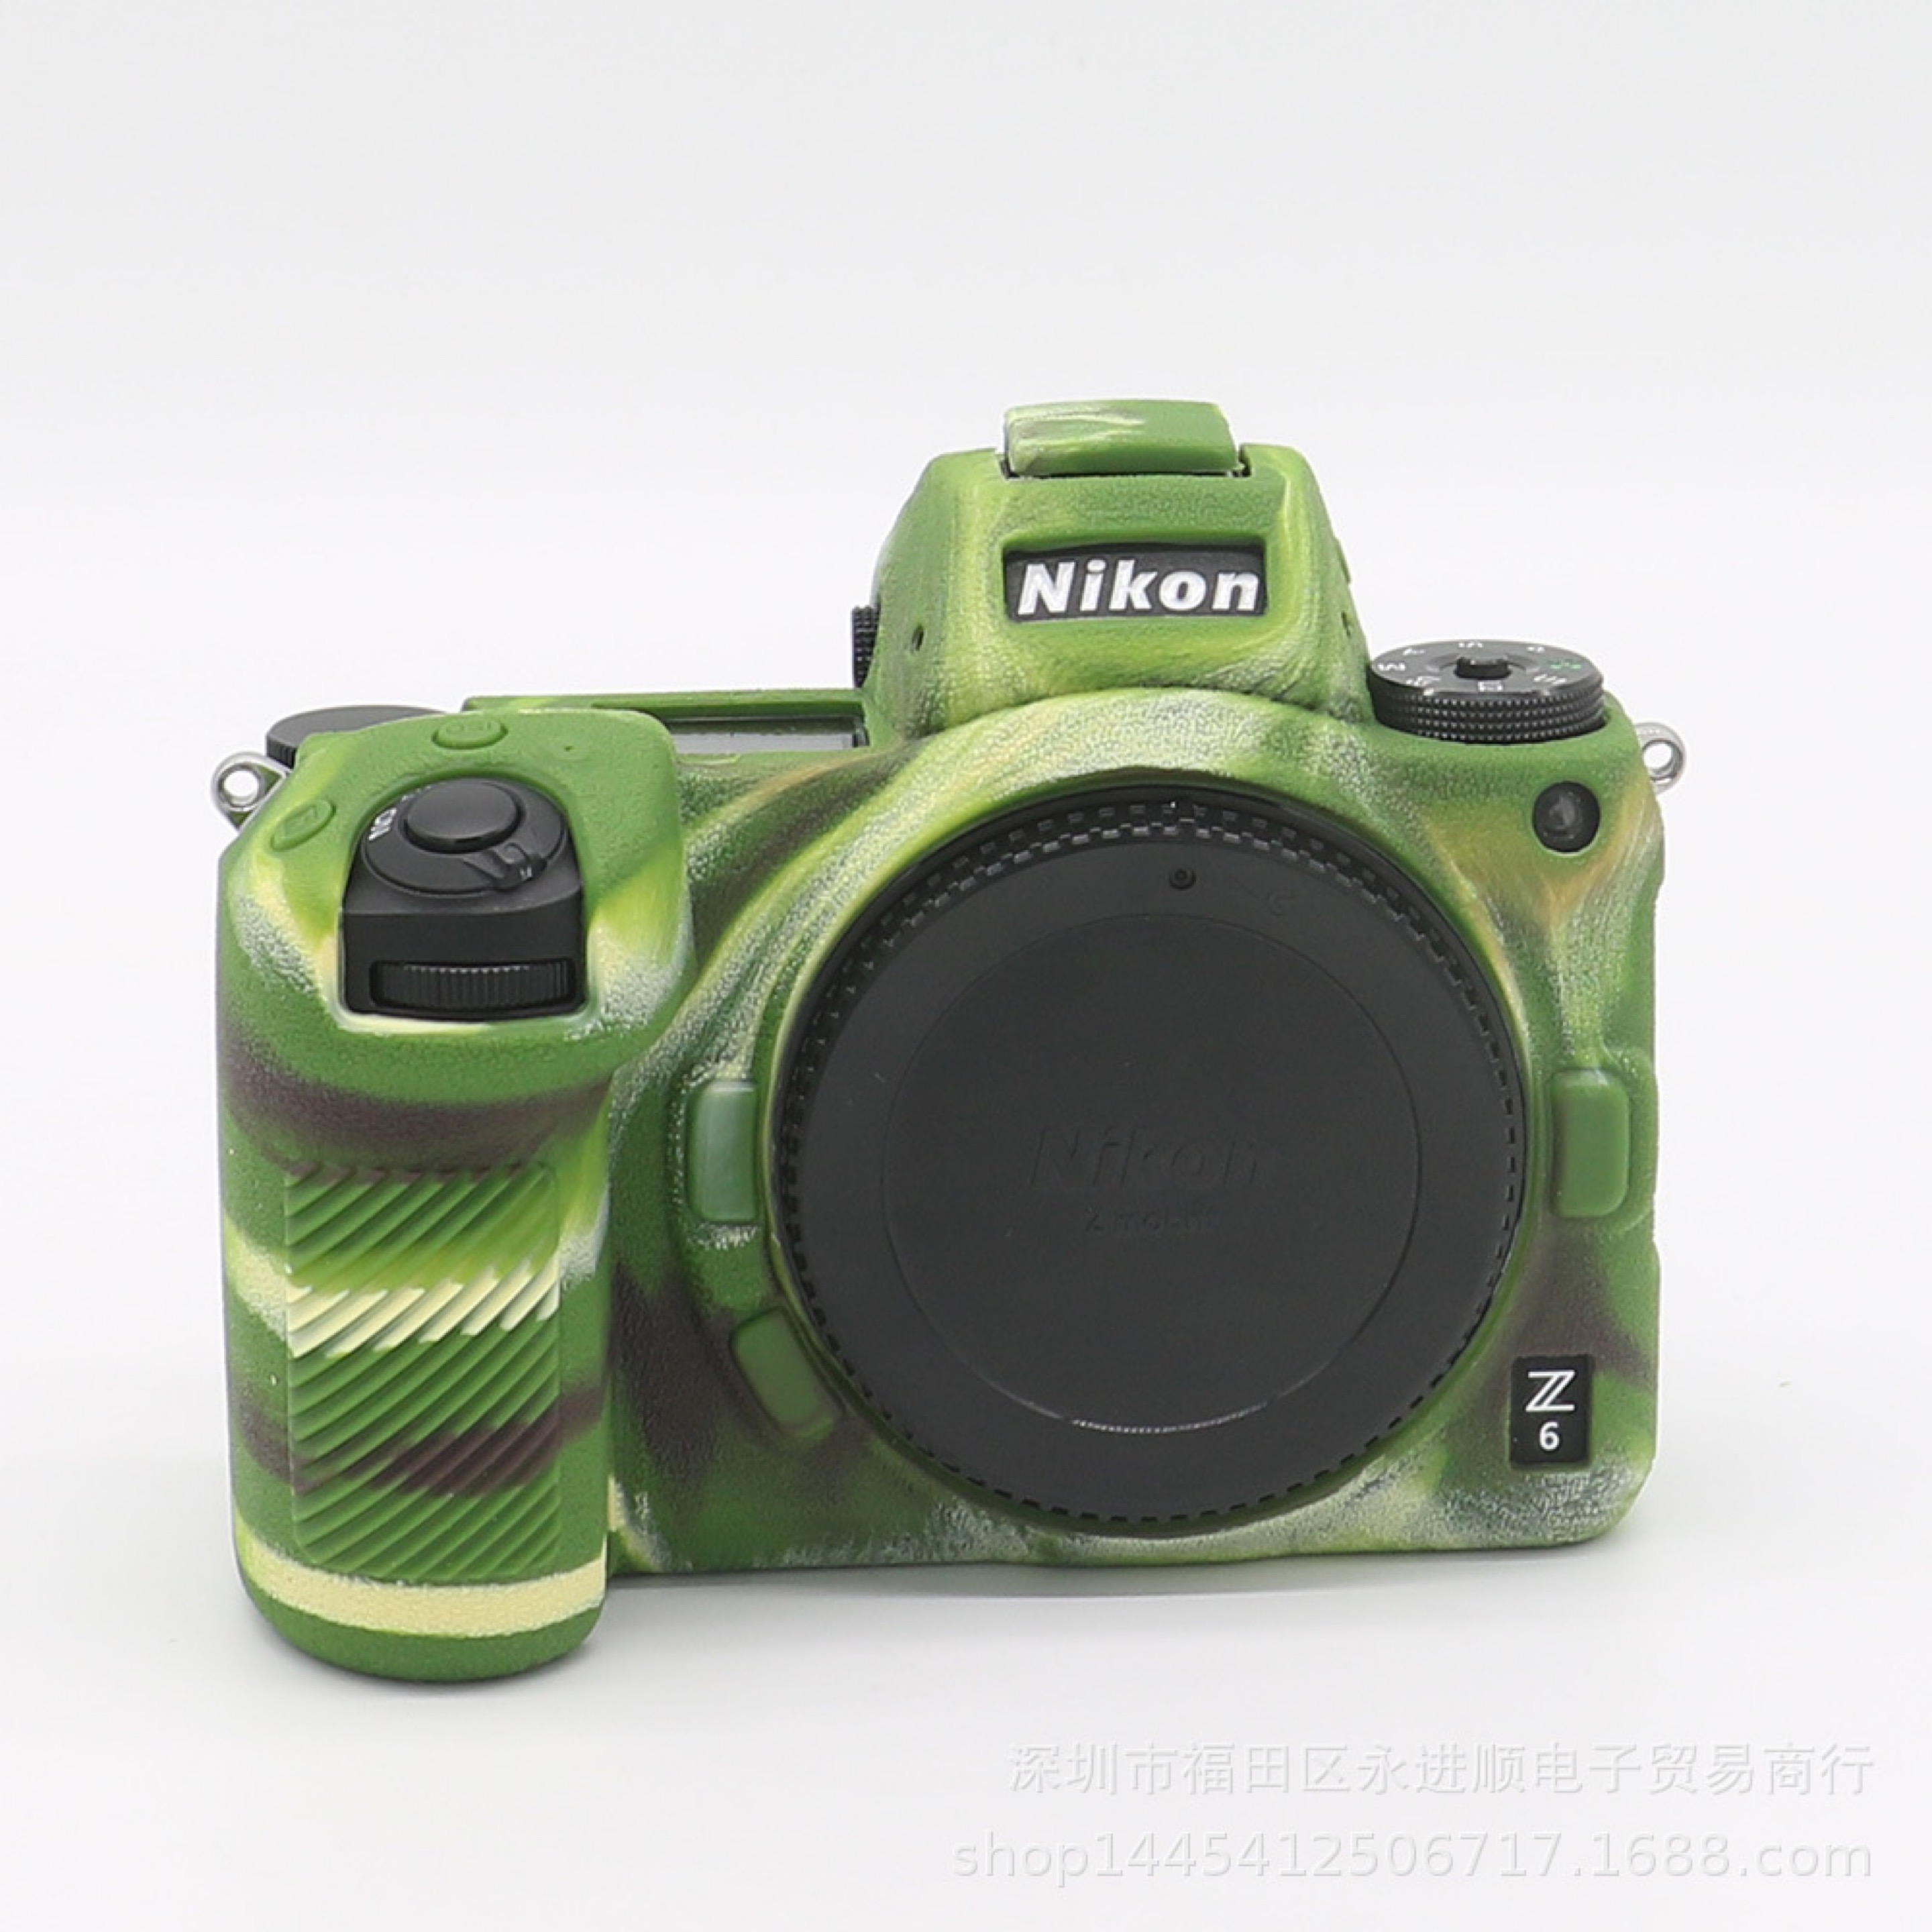 Bao Silicon Bảo Vệ Máy Ảnh Cho Nikon Z6 / Z7